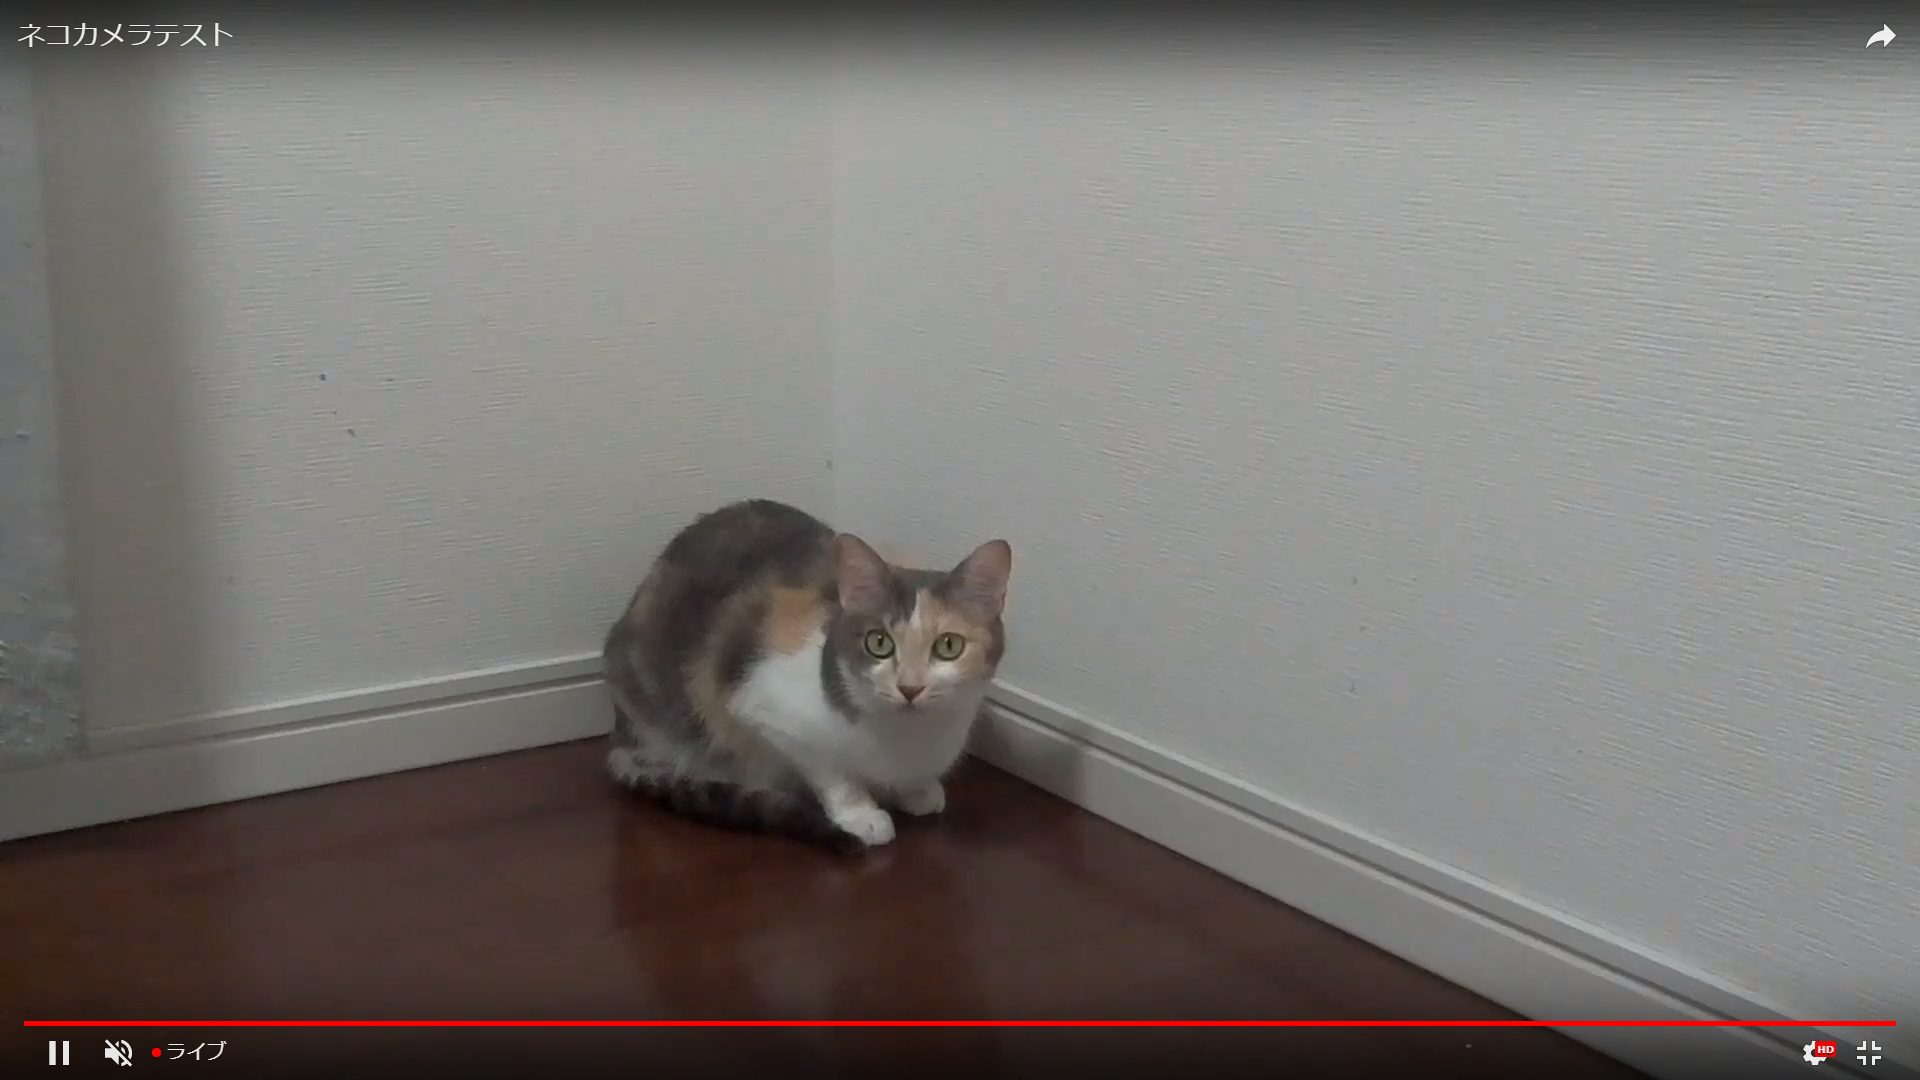 Raspberry Pi Zero W + カメラモジュール でネコ観察ライブカメラ(YoutubeLive対応)を作る